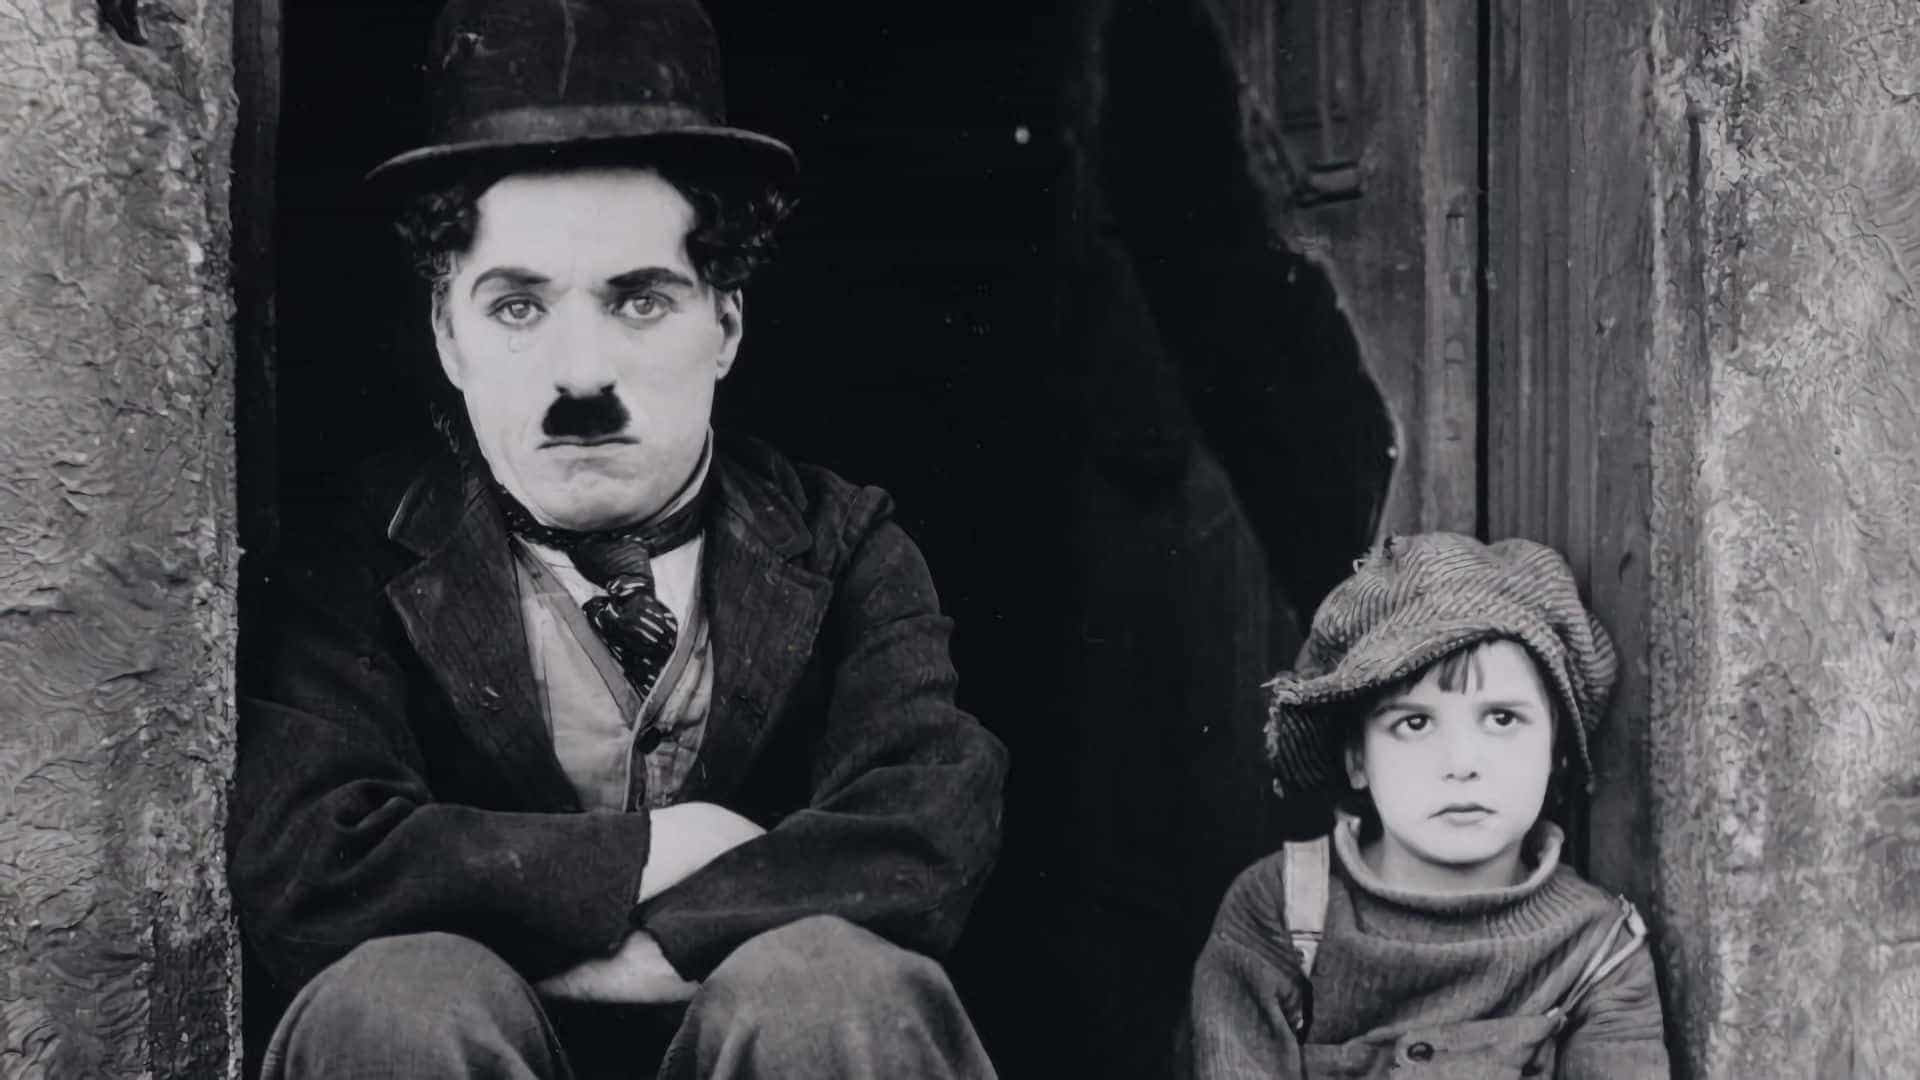 Manchester Camerata presents Charlie Chaplin's The Kid